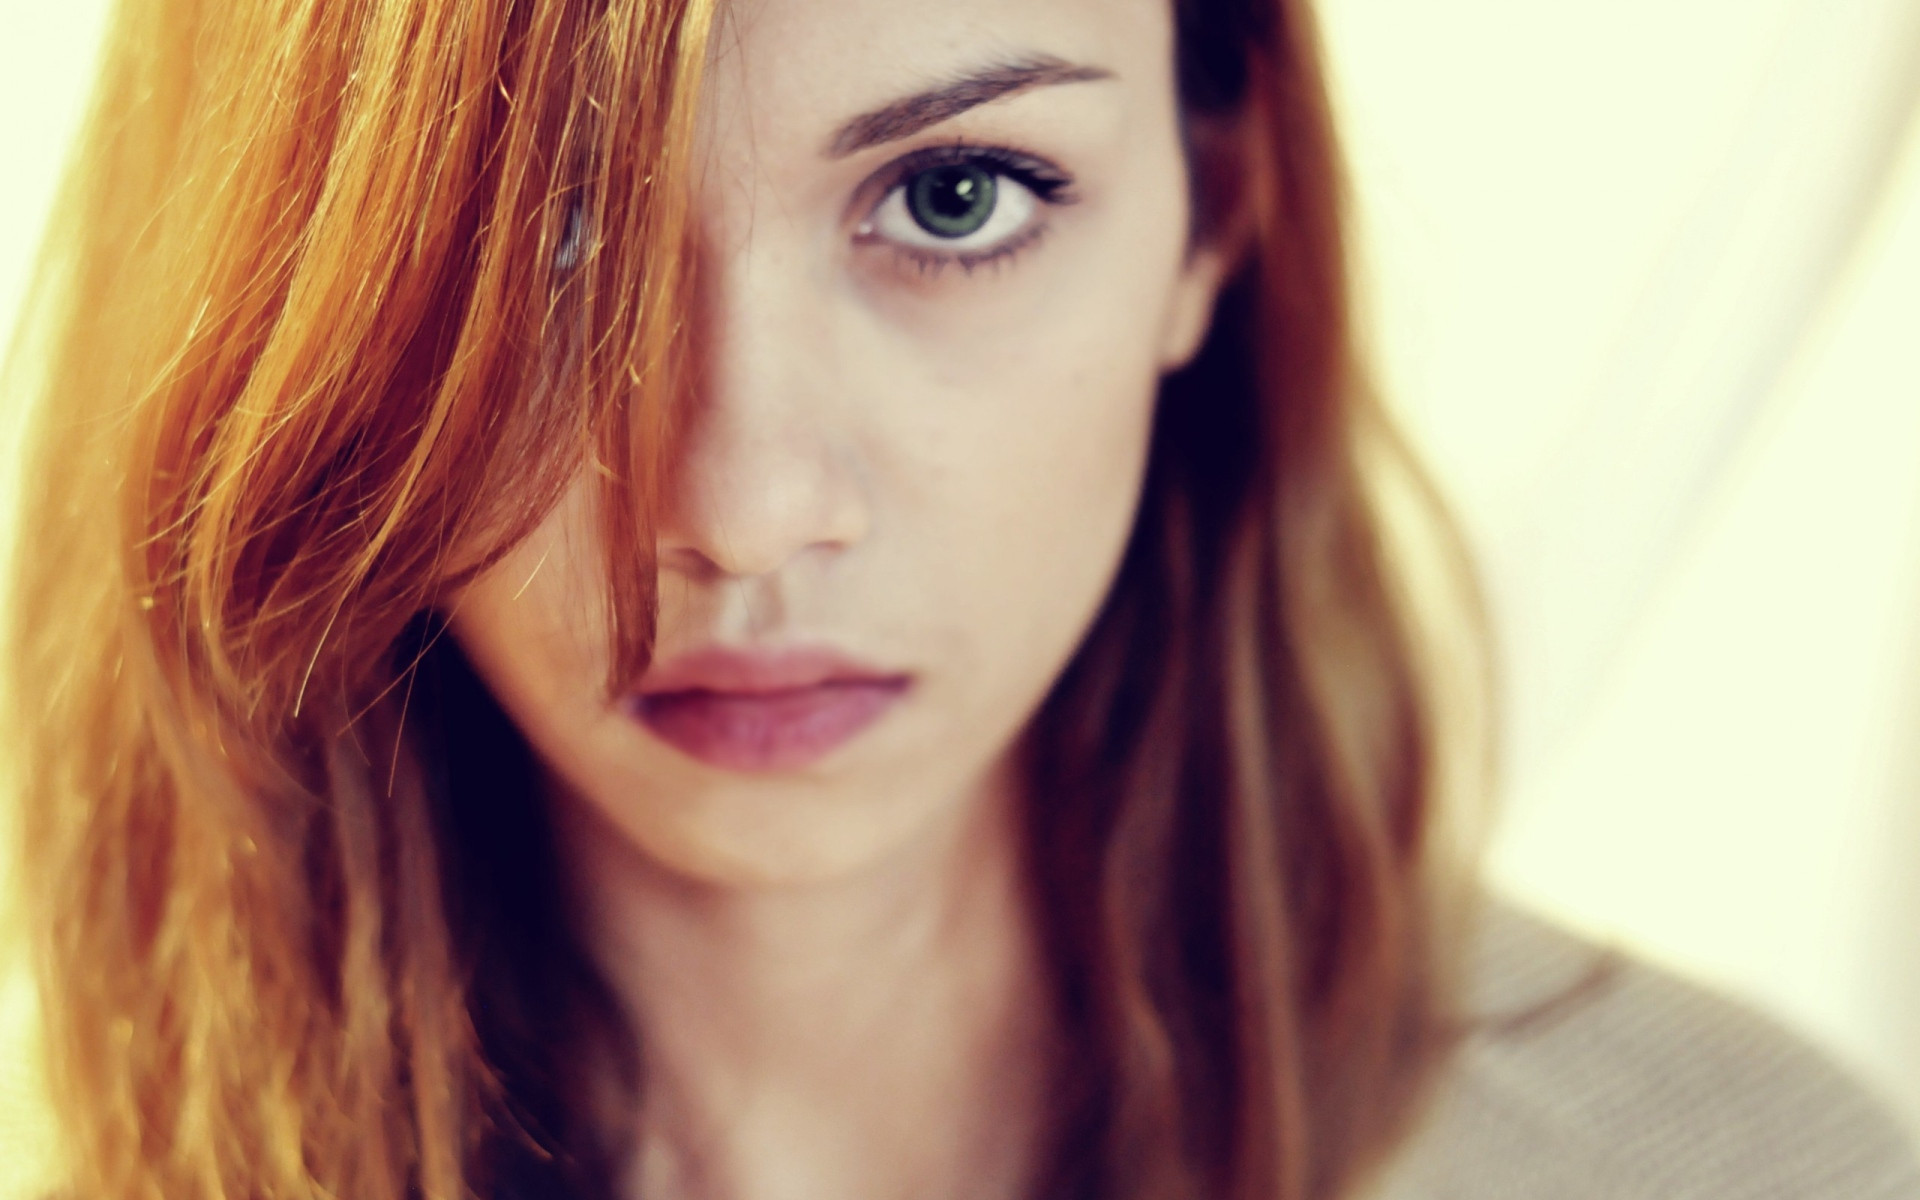 Gorgeous Redhead Wallpaper - Girl Close Up Portrait - HD Wallpaper 